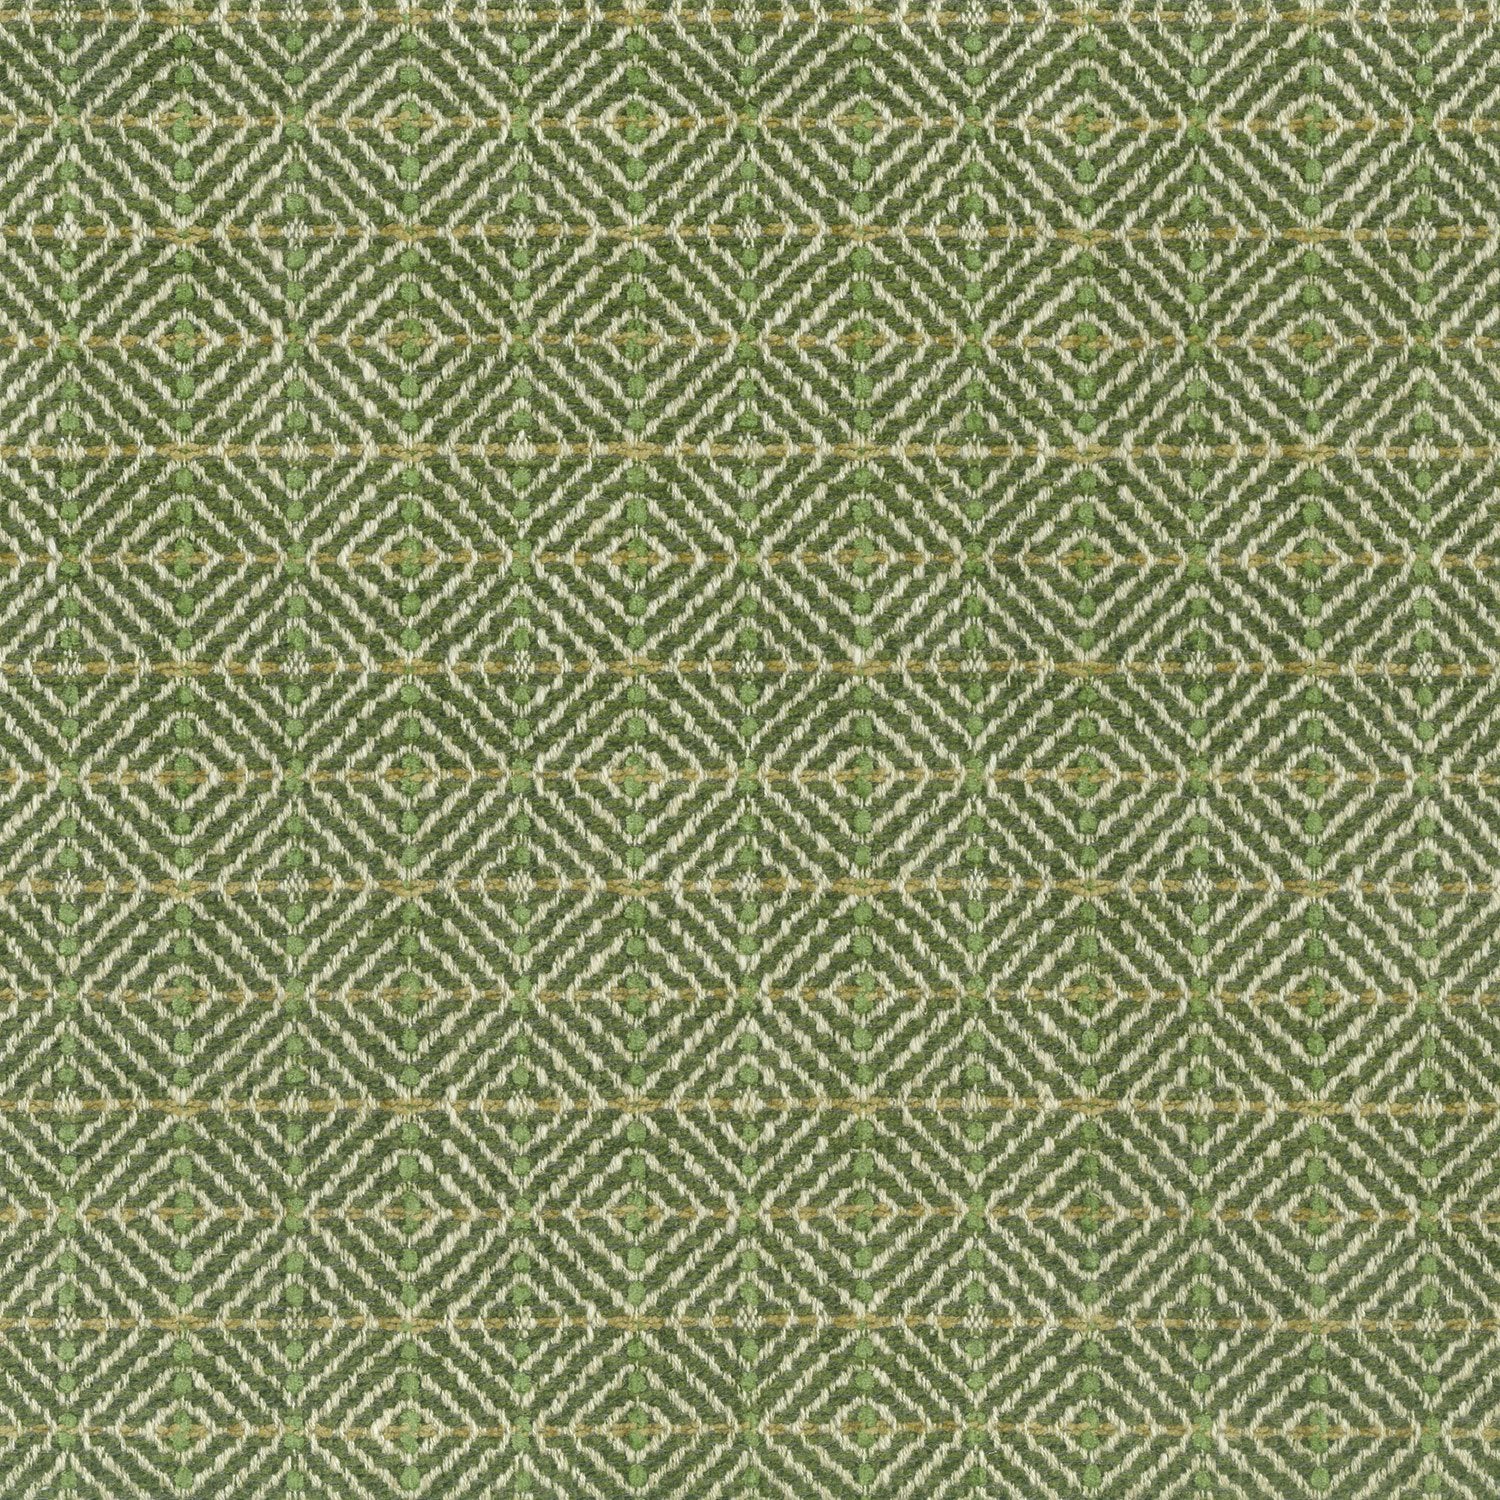 Nina Campbell Fabric - Umbria Todi Green/Olive/Gold NCF4262-05